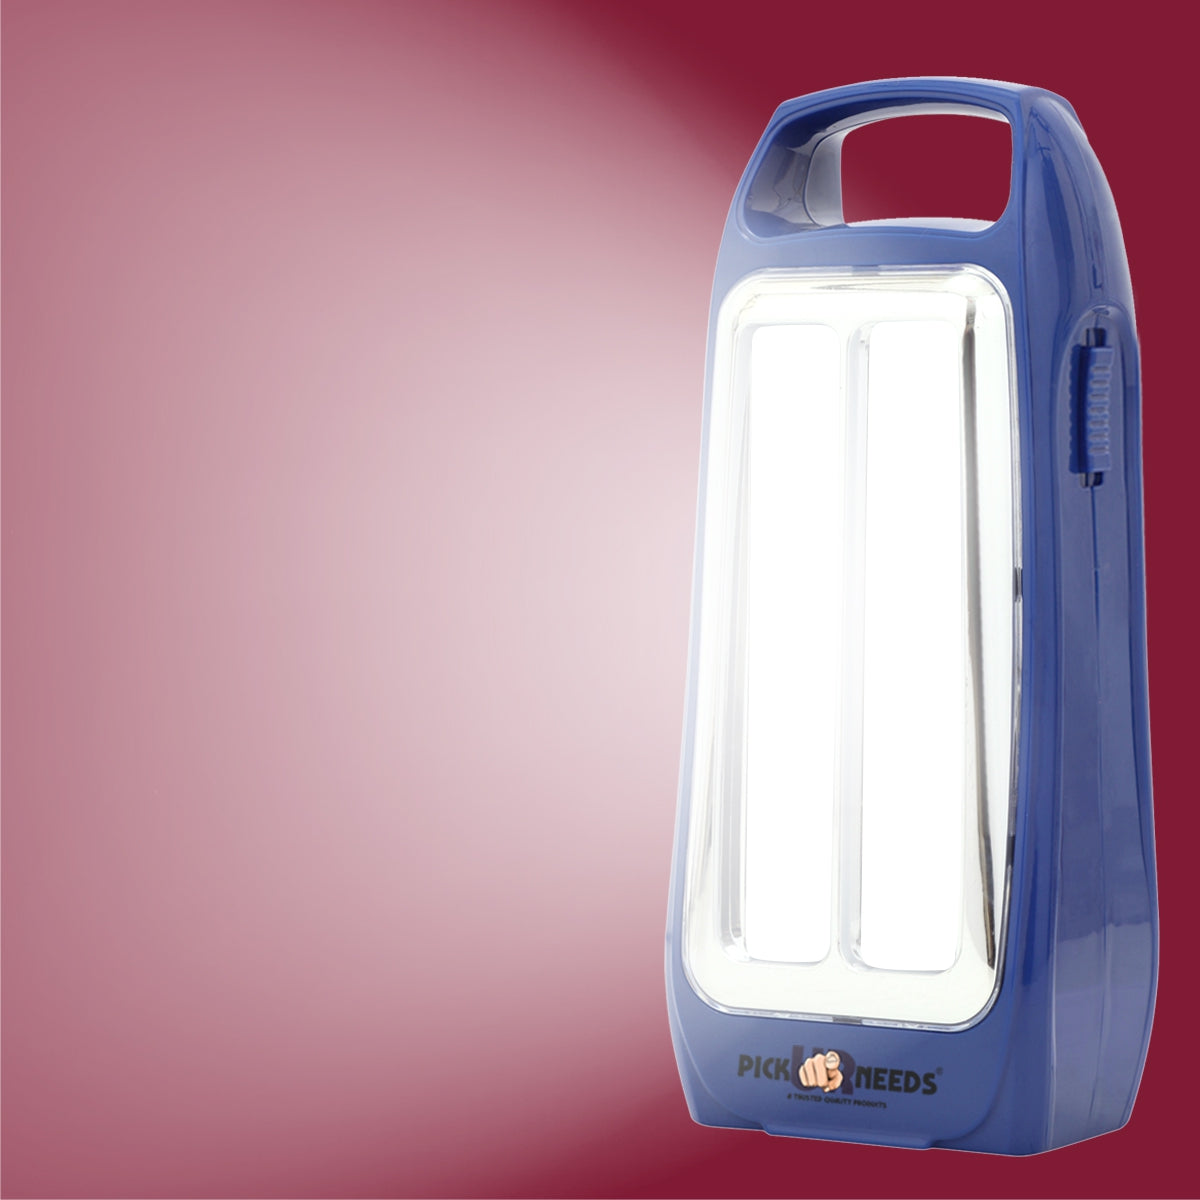 Pick Ur Needs Rechargeable & Portable Bright 2 Tube LED Lantern Lamp Home Emergency Light